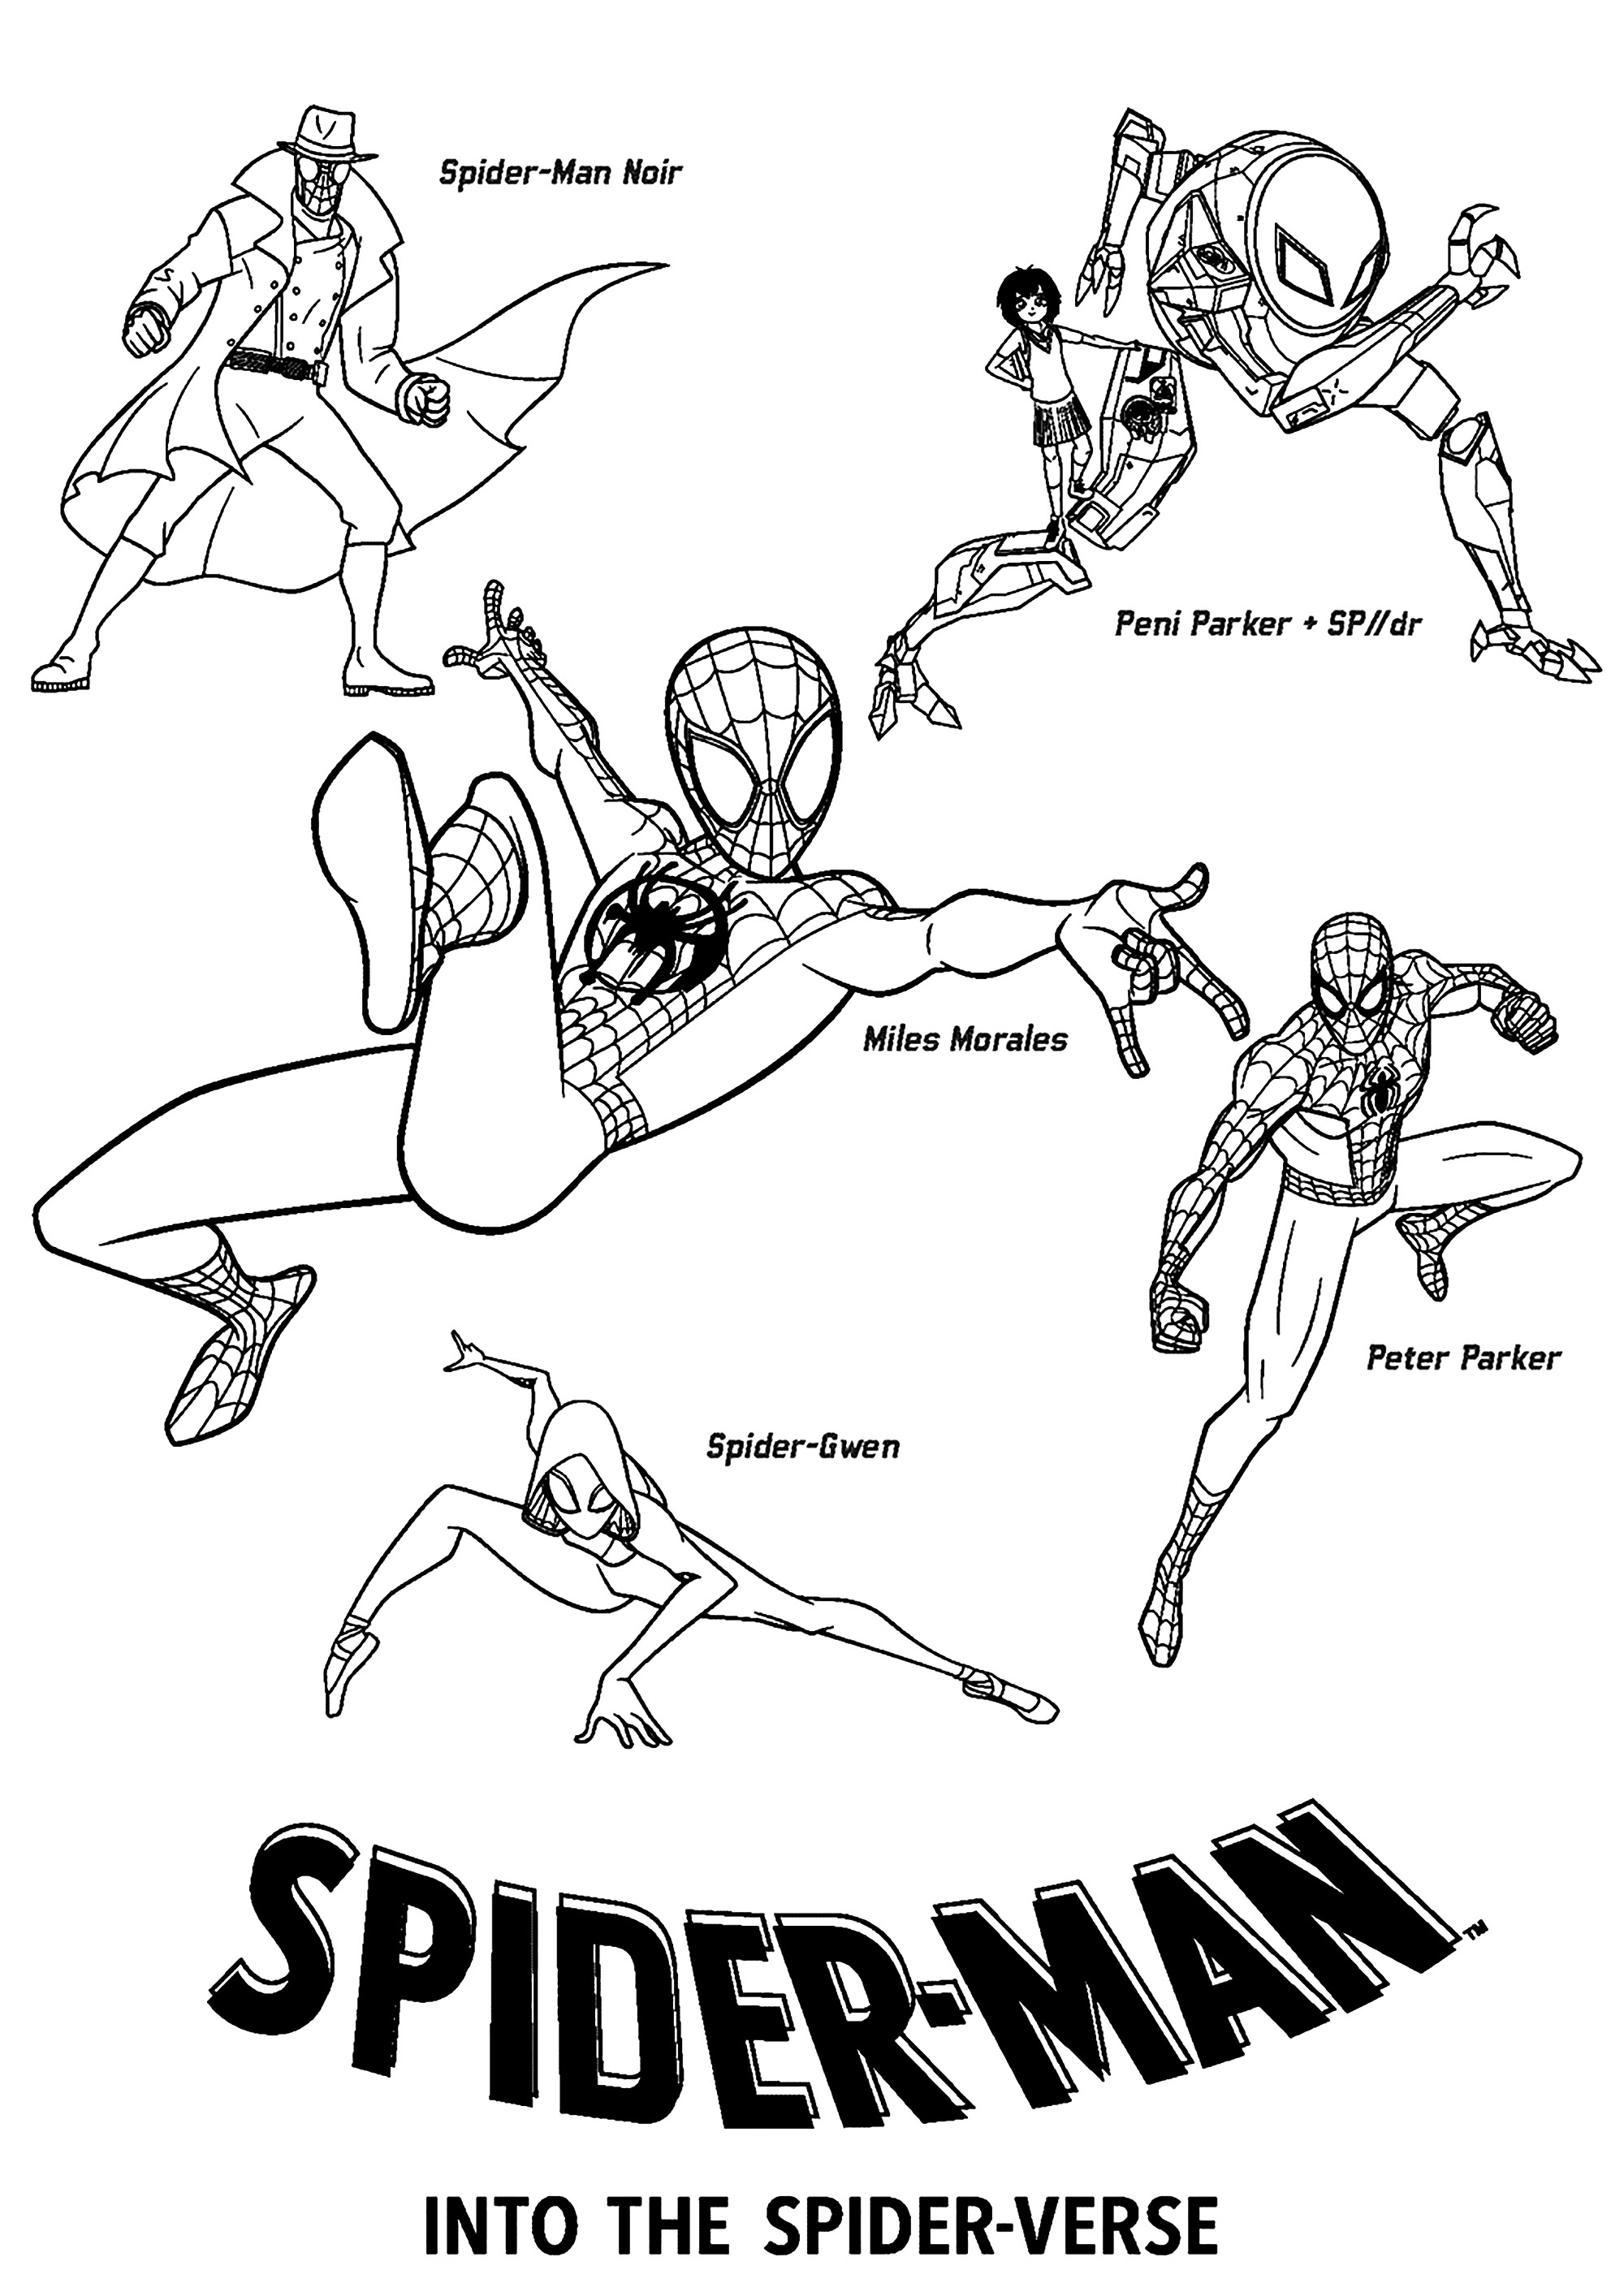 Spider-Man into the Spider Verse : Personagens. Spider-Gwen, Homem-Aranha (Peter Parker e Mike Morales), Peni Parker SP//dr, Homem-Aranha Noir